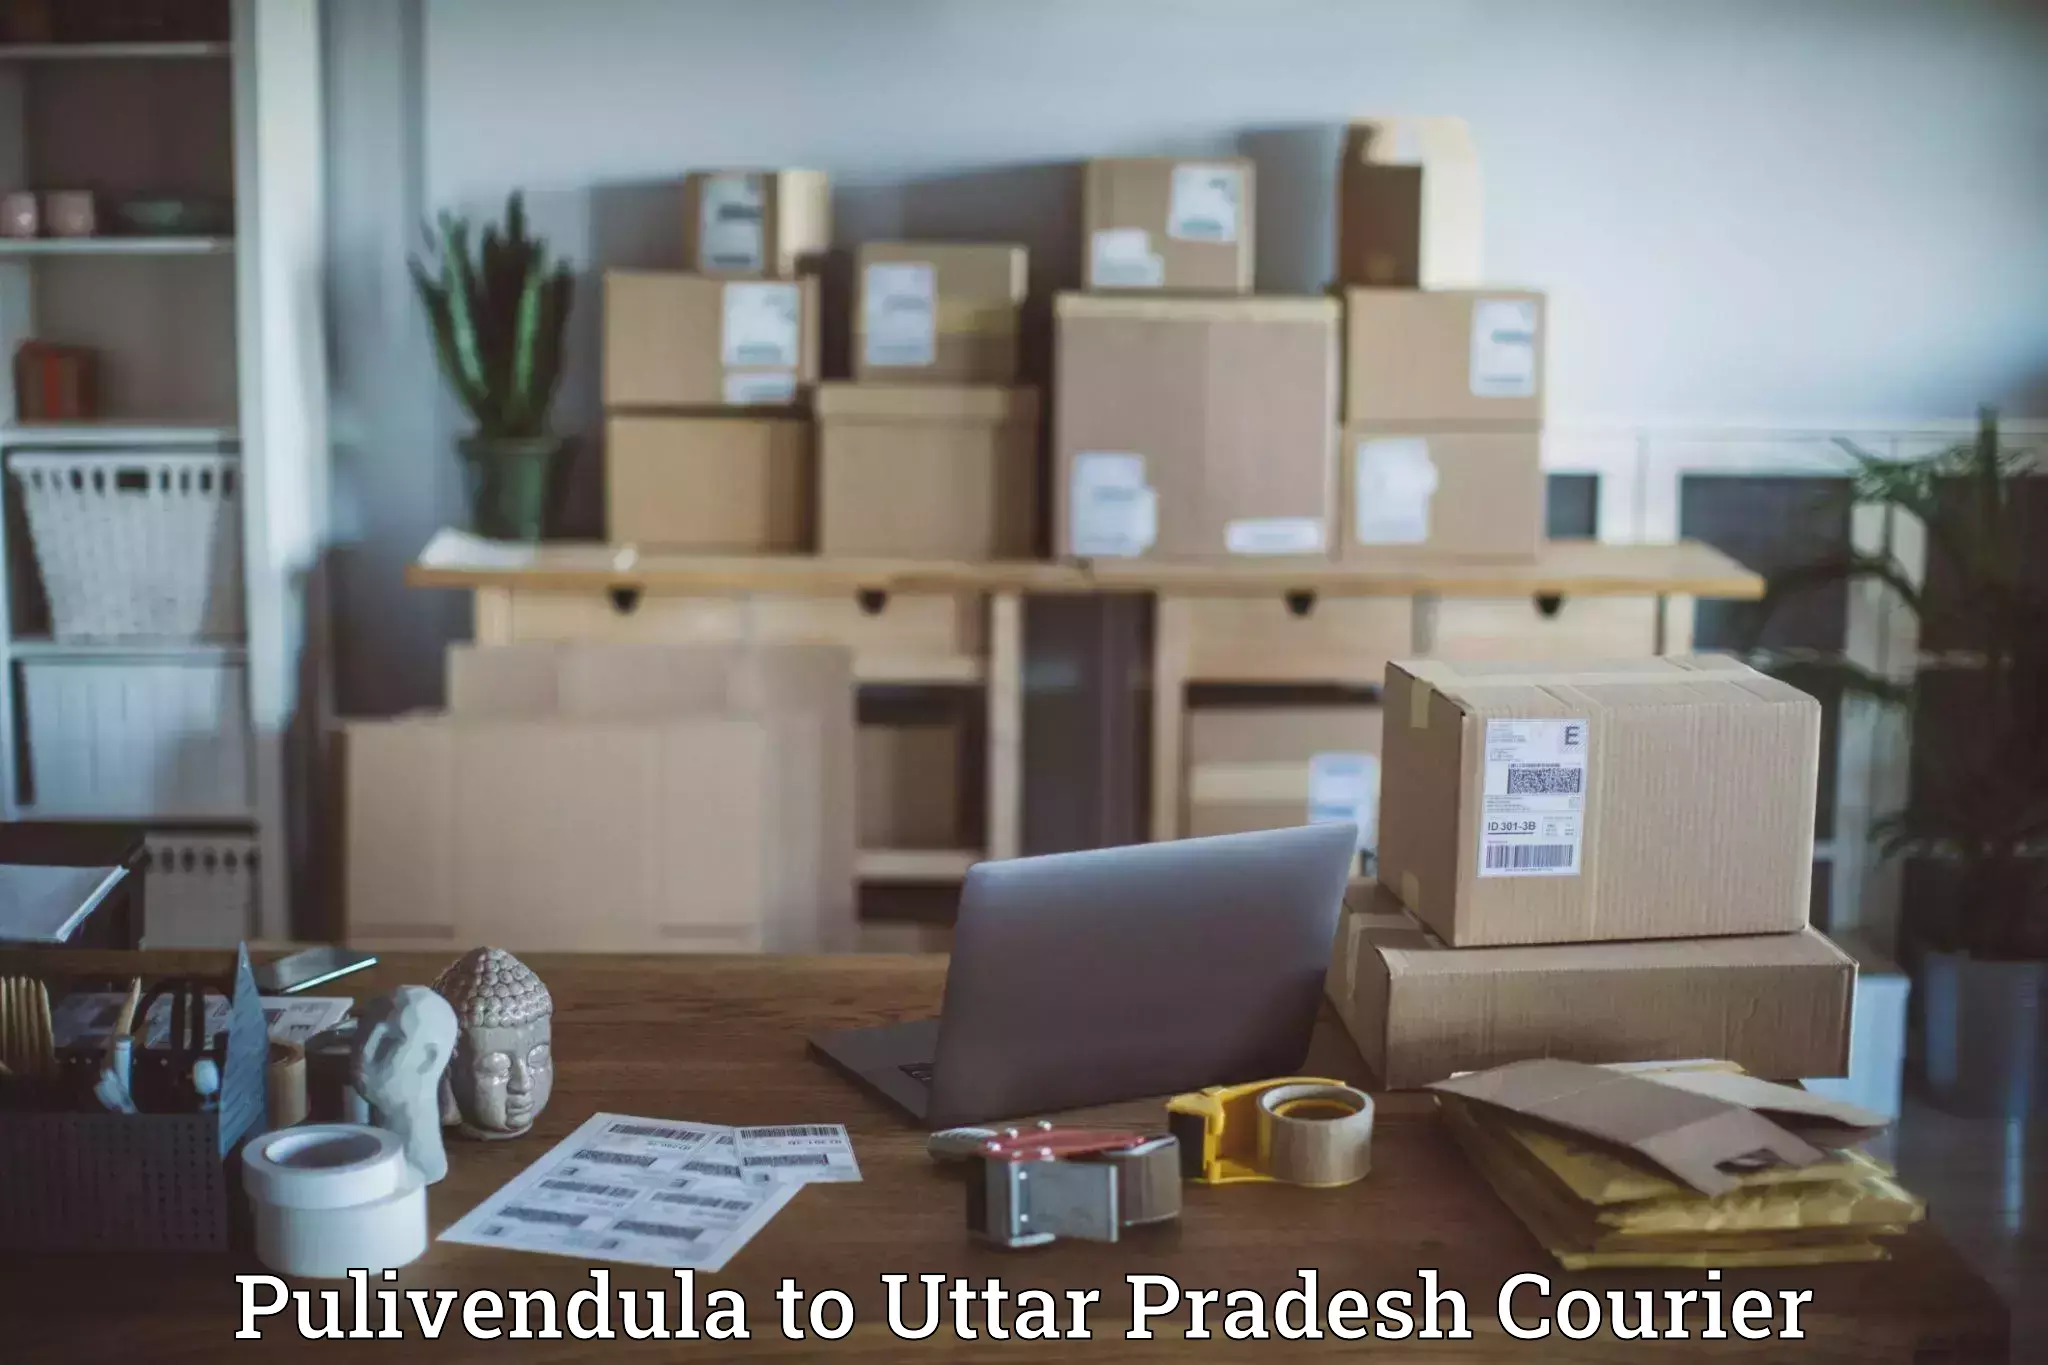 International parcel service Pulivendula to Agra